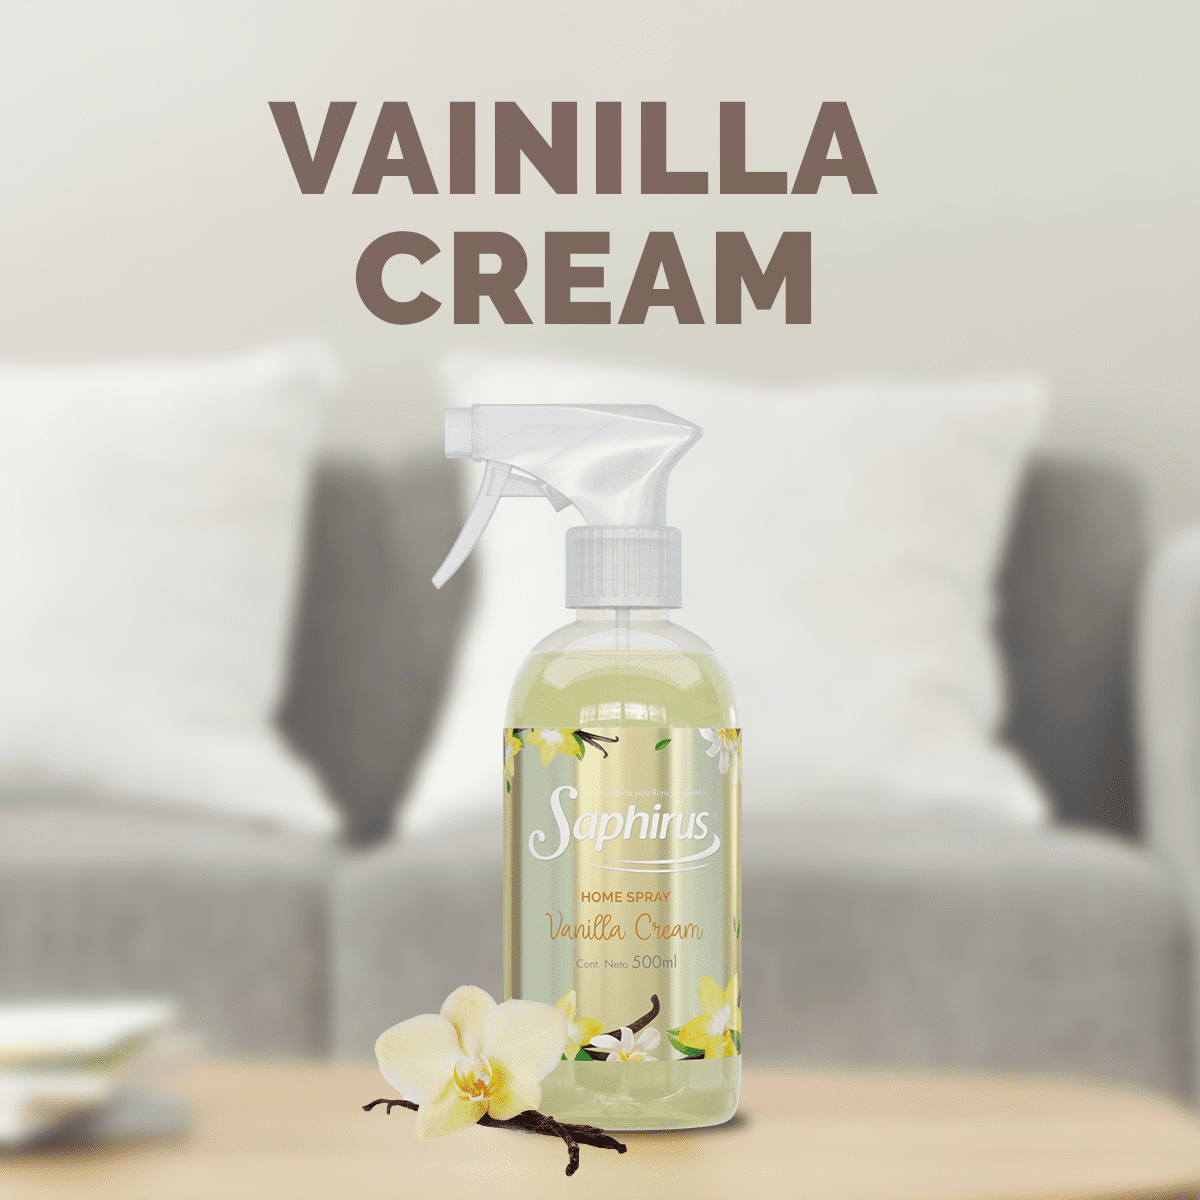 Saphirus Home Spray Vainilla Cream